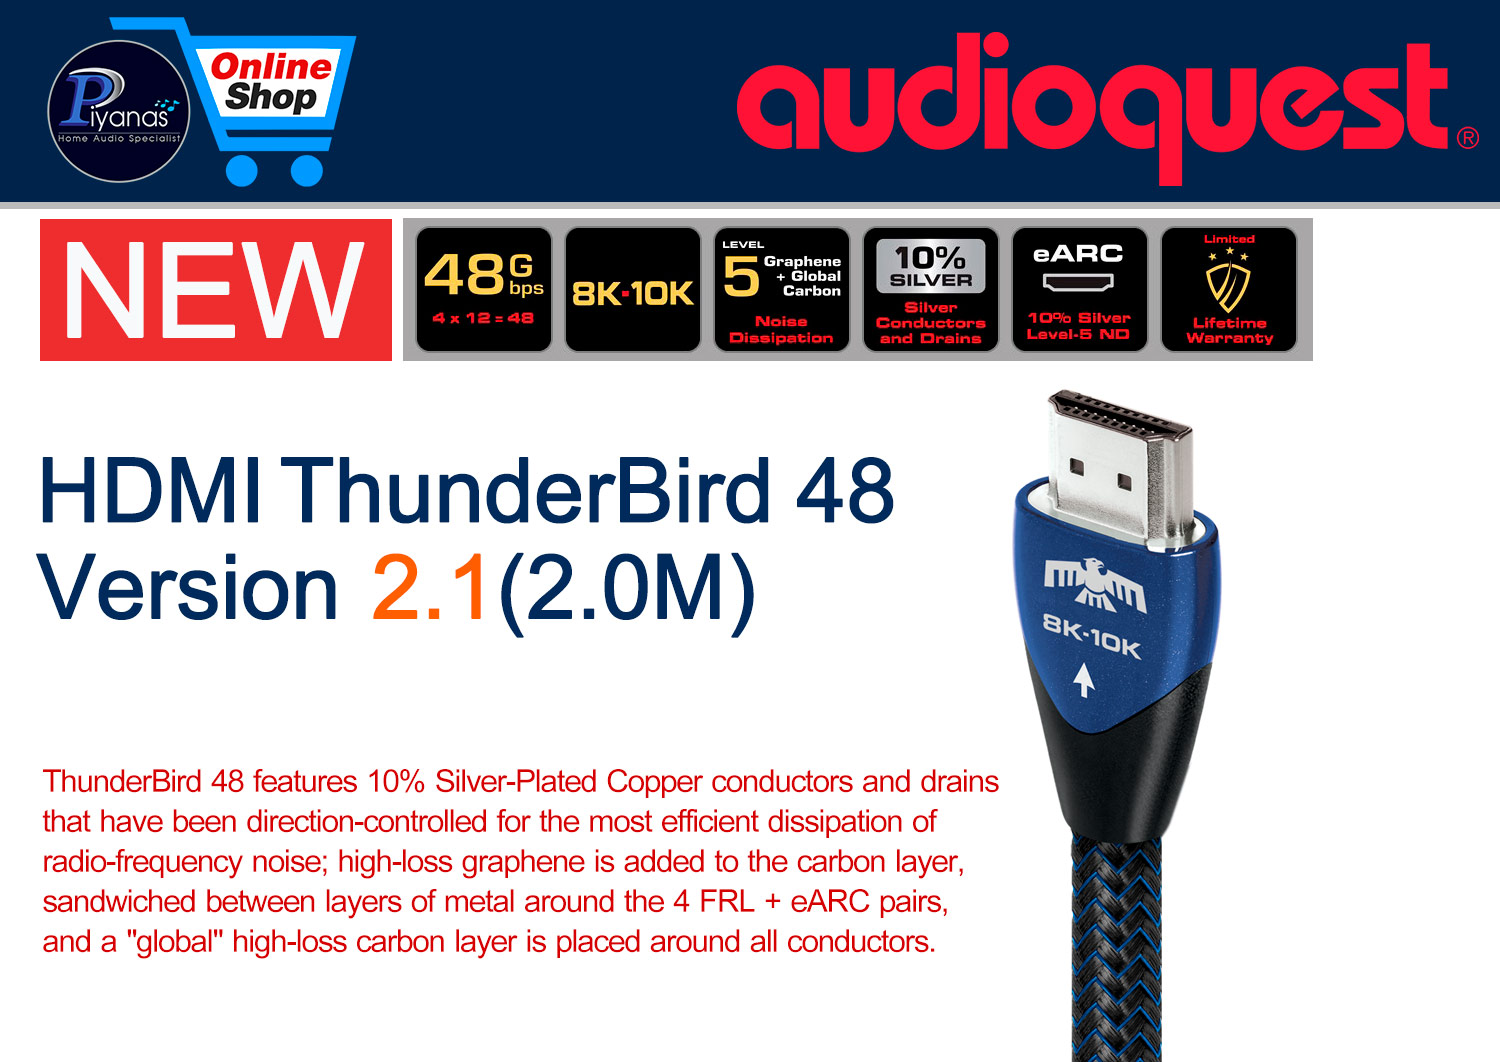 HDMI-ThunderBird 48 Version 2.1 (2.0M)